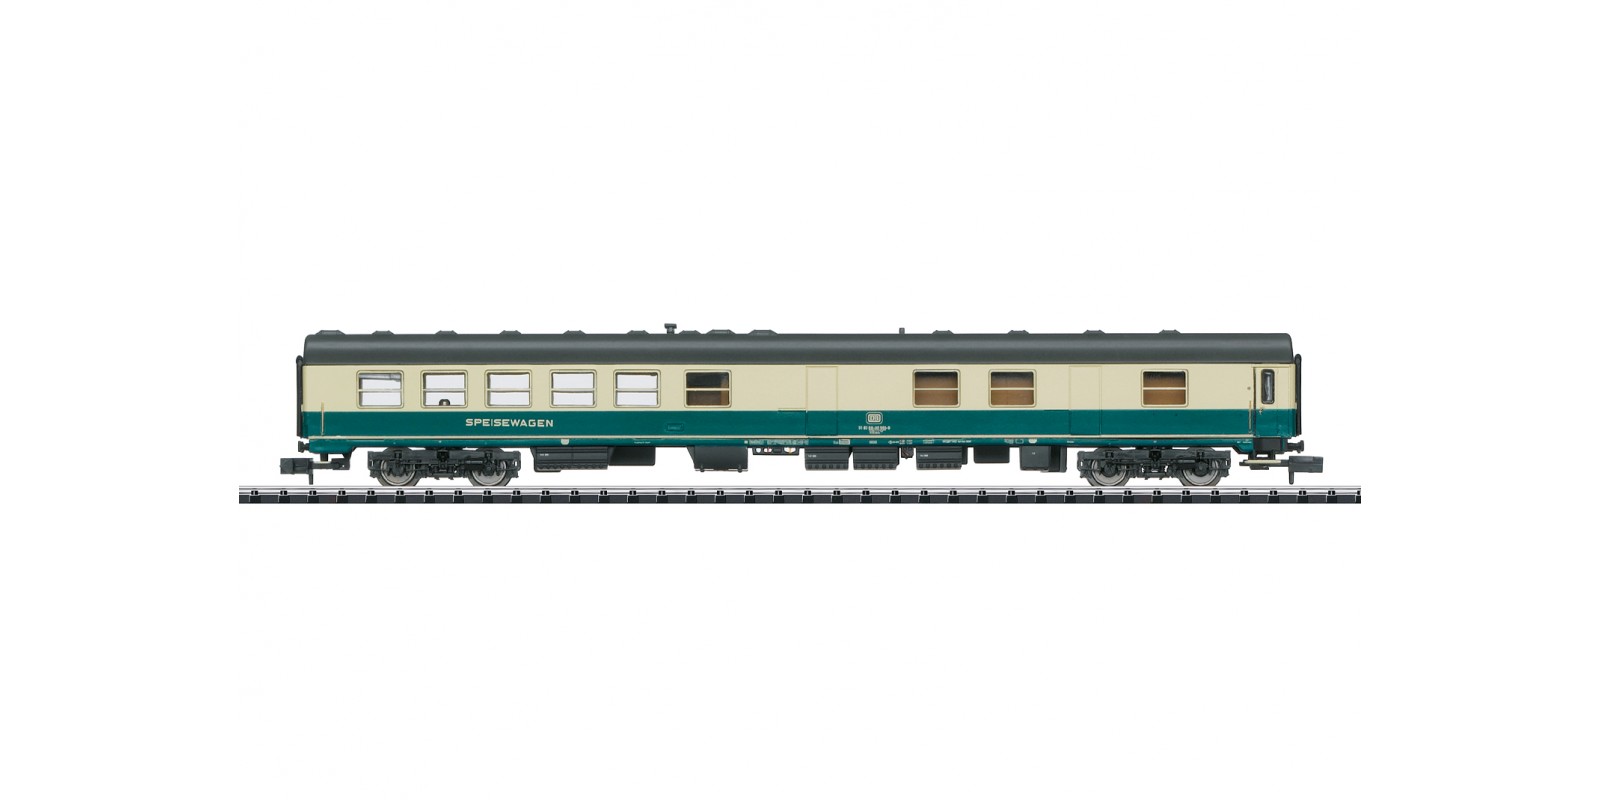 T18485 Type WRtm 134 Express Train Dining Car